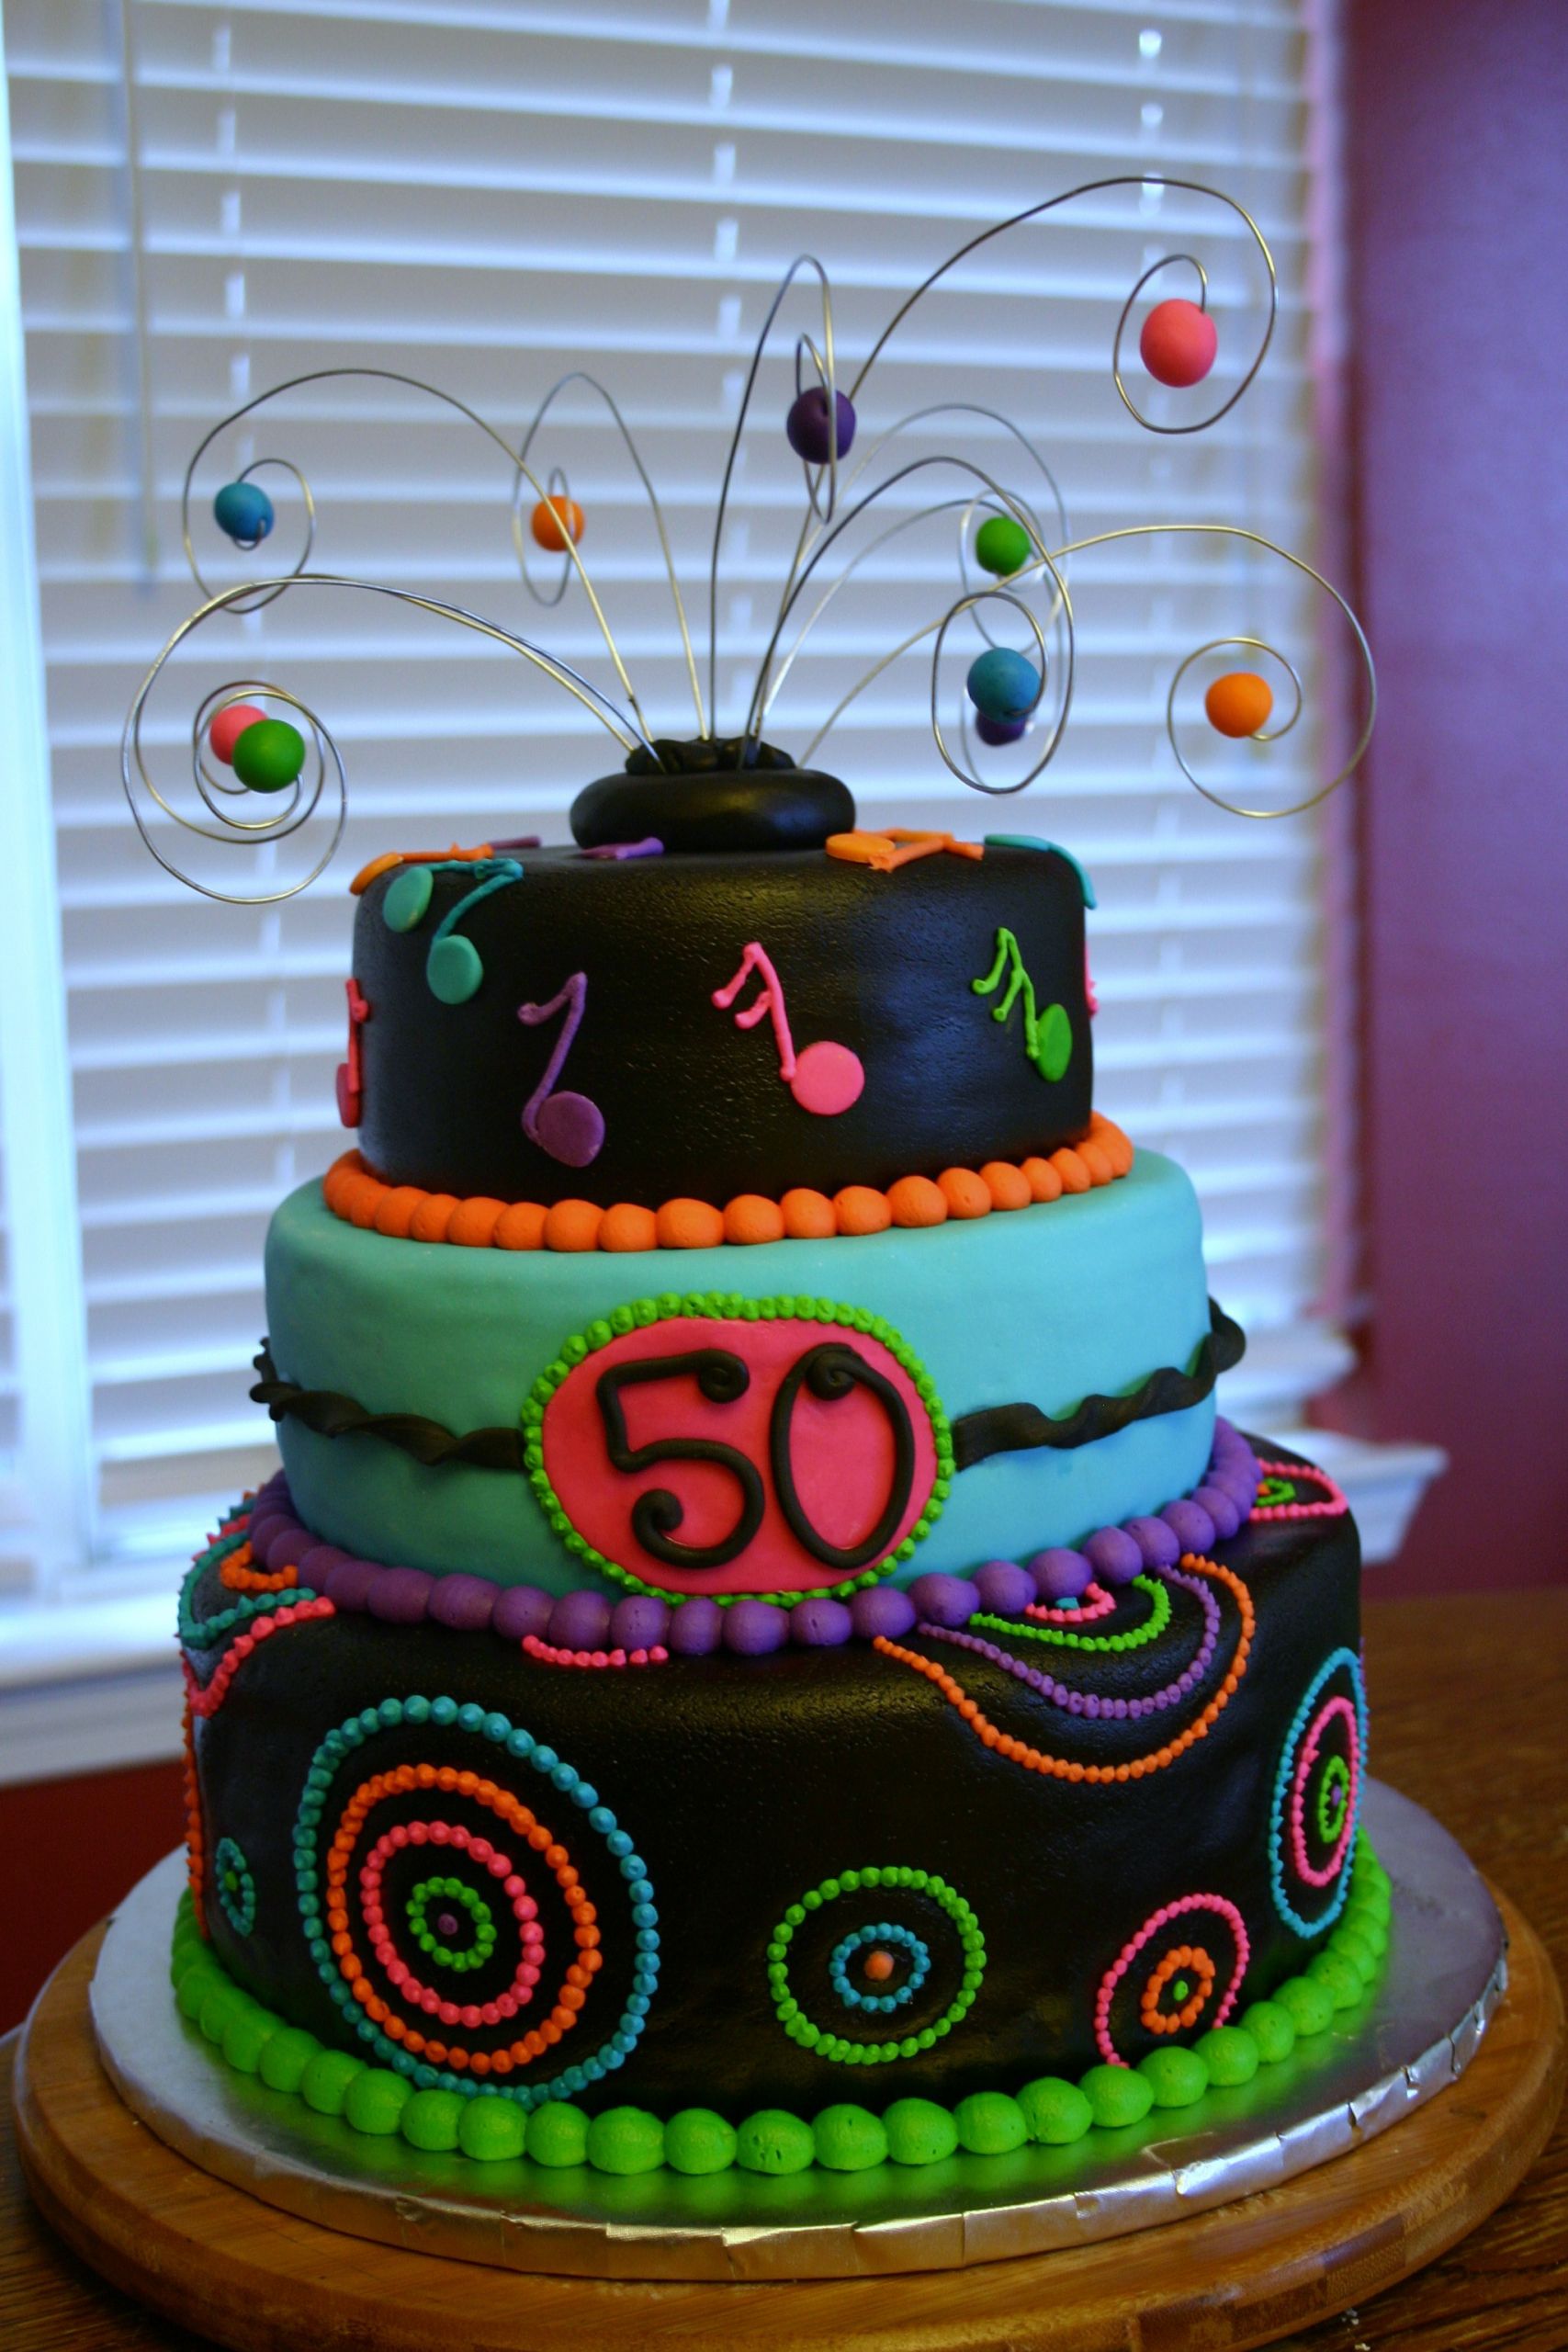 Neon Birthday Cake
 Neon color cake